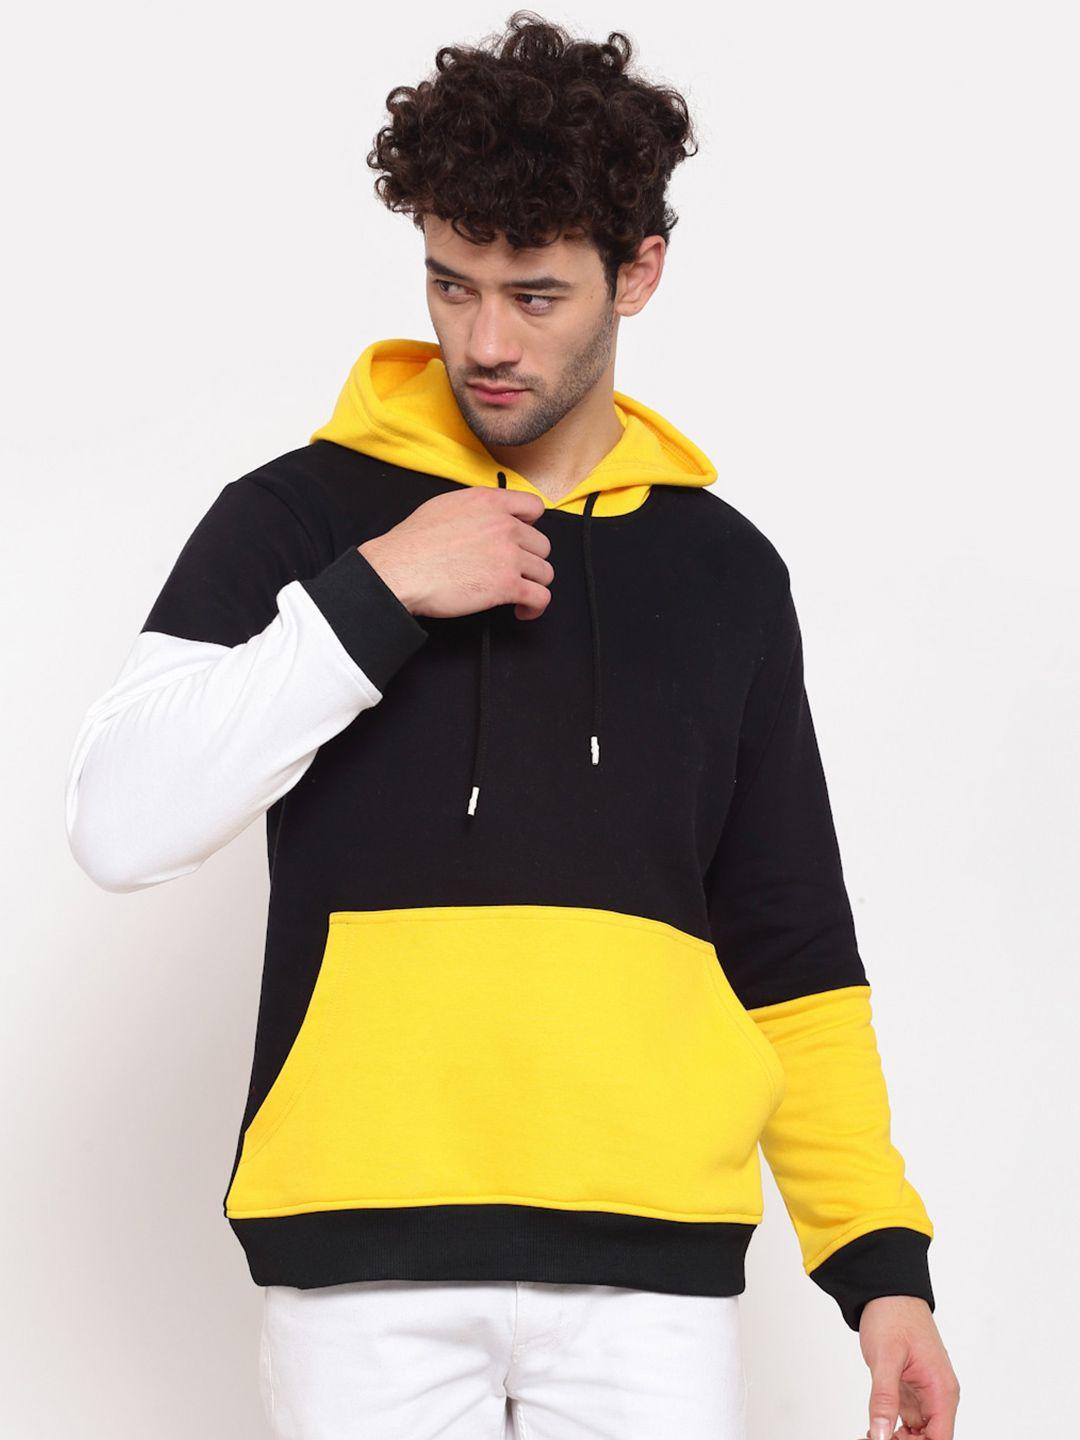 pause-sport-colourblocked-fleece-sweatshirt